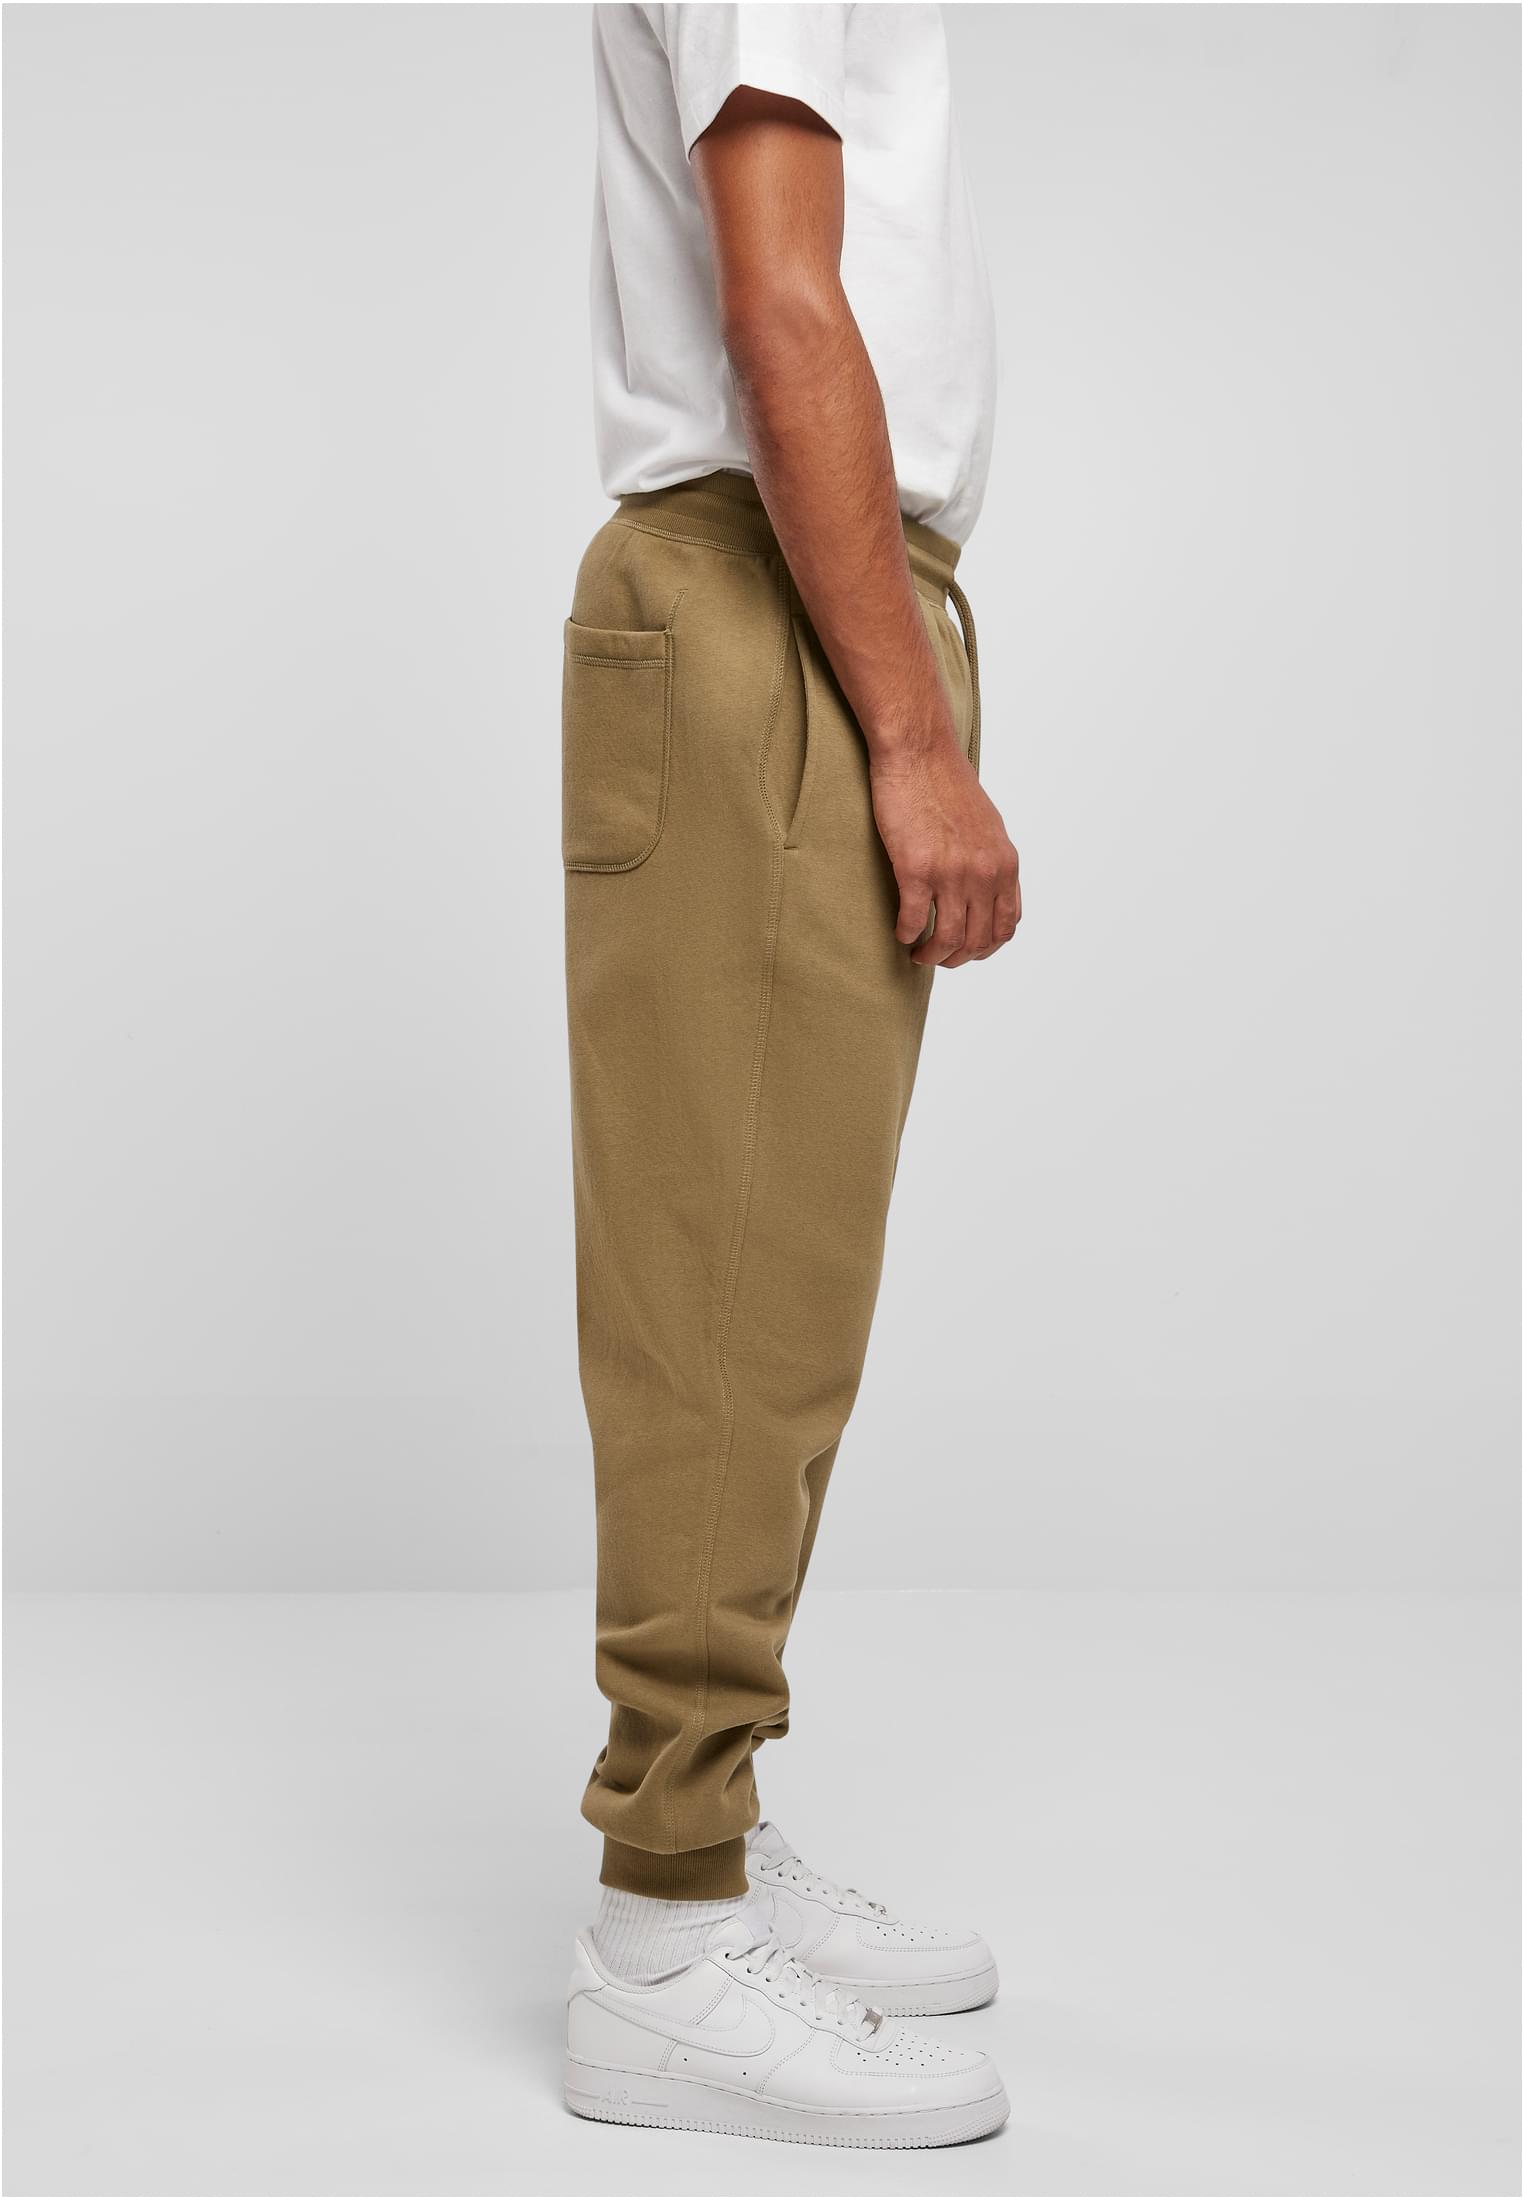 Herren Basic Sweatpants in Farbe tiniolive